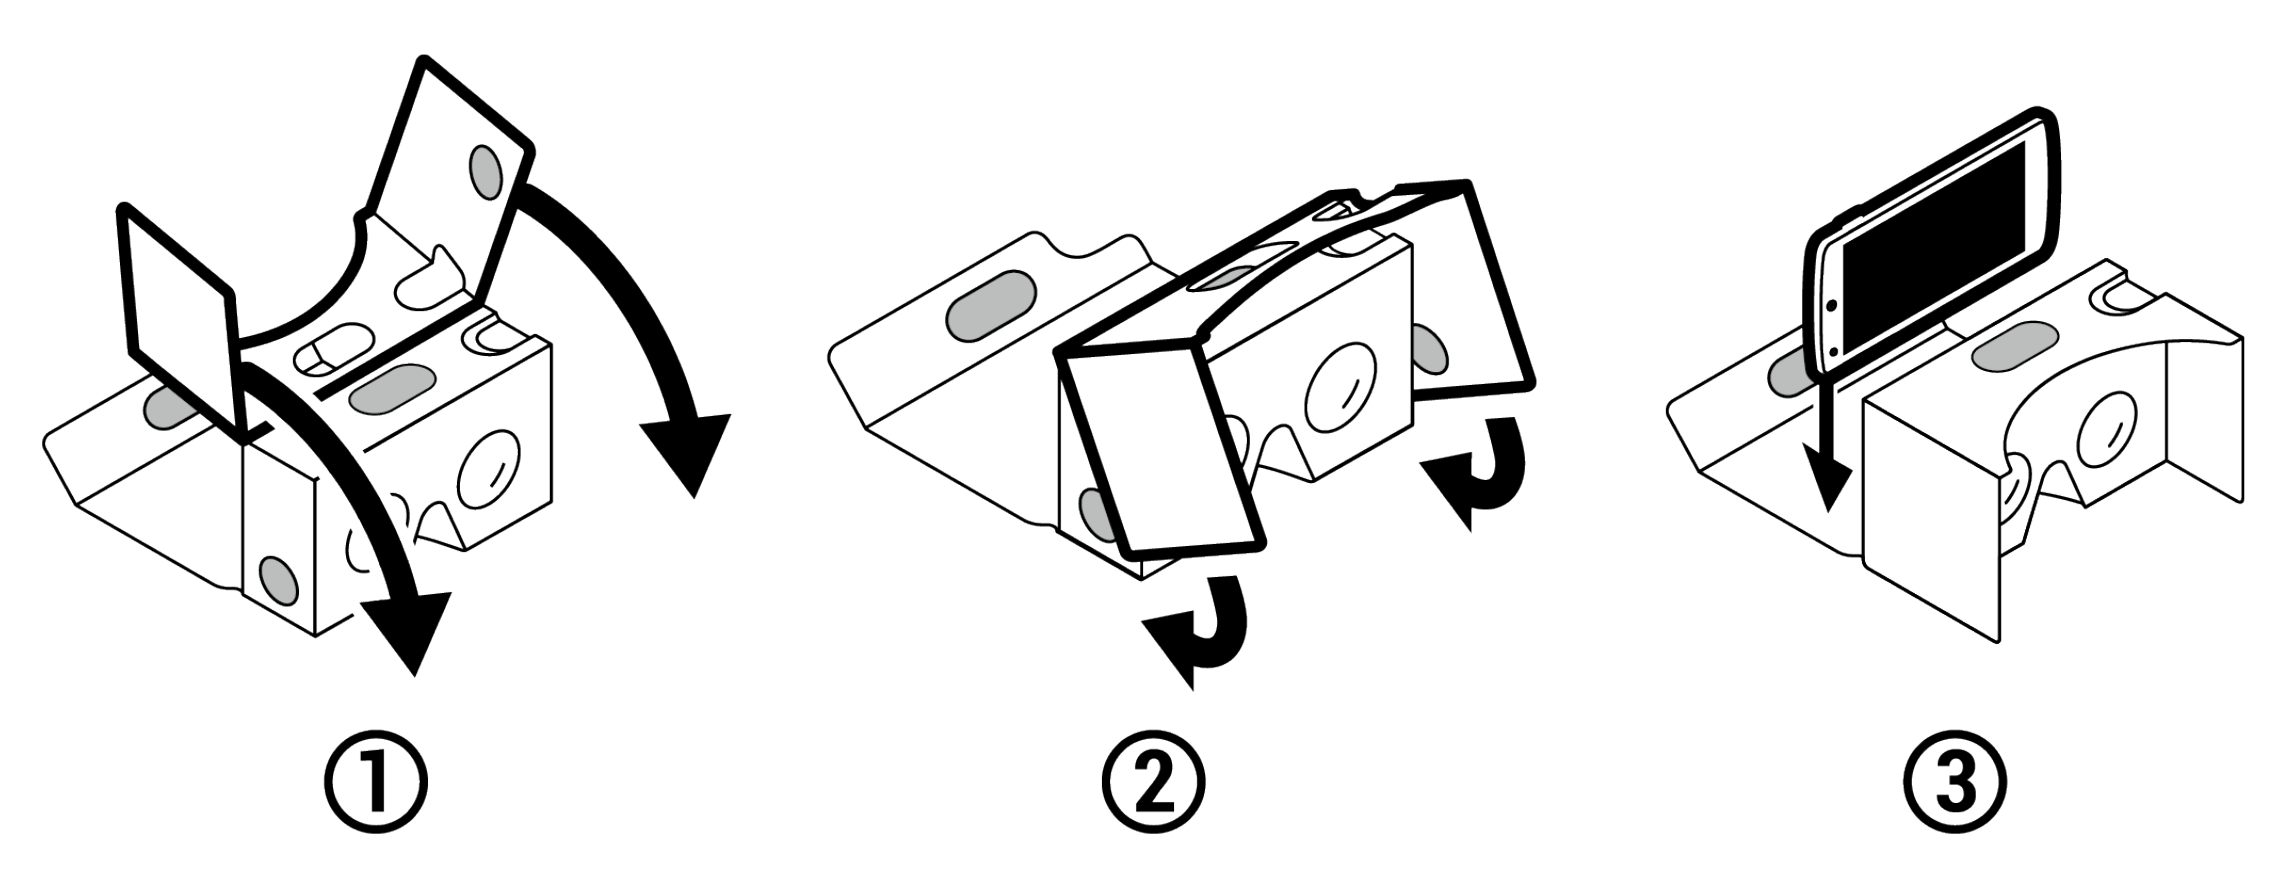 Cardboard Setup instructions